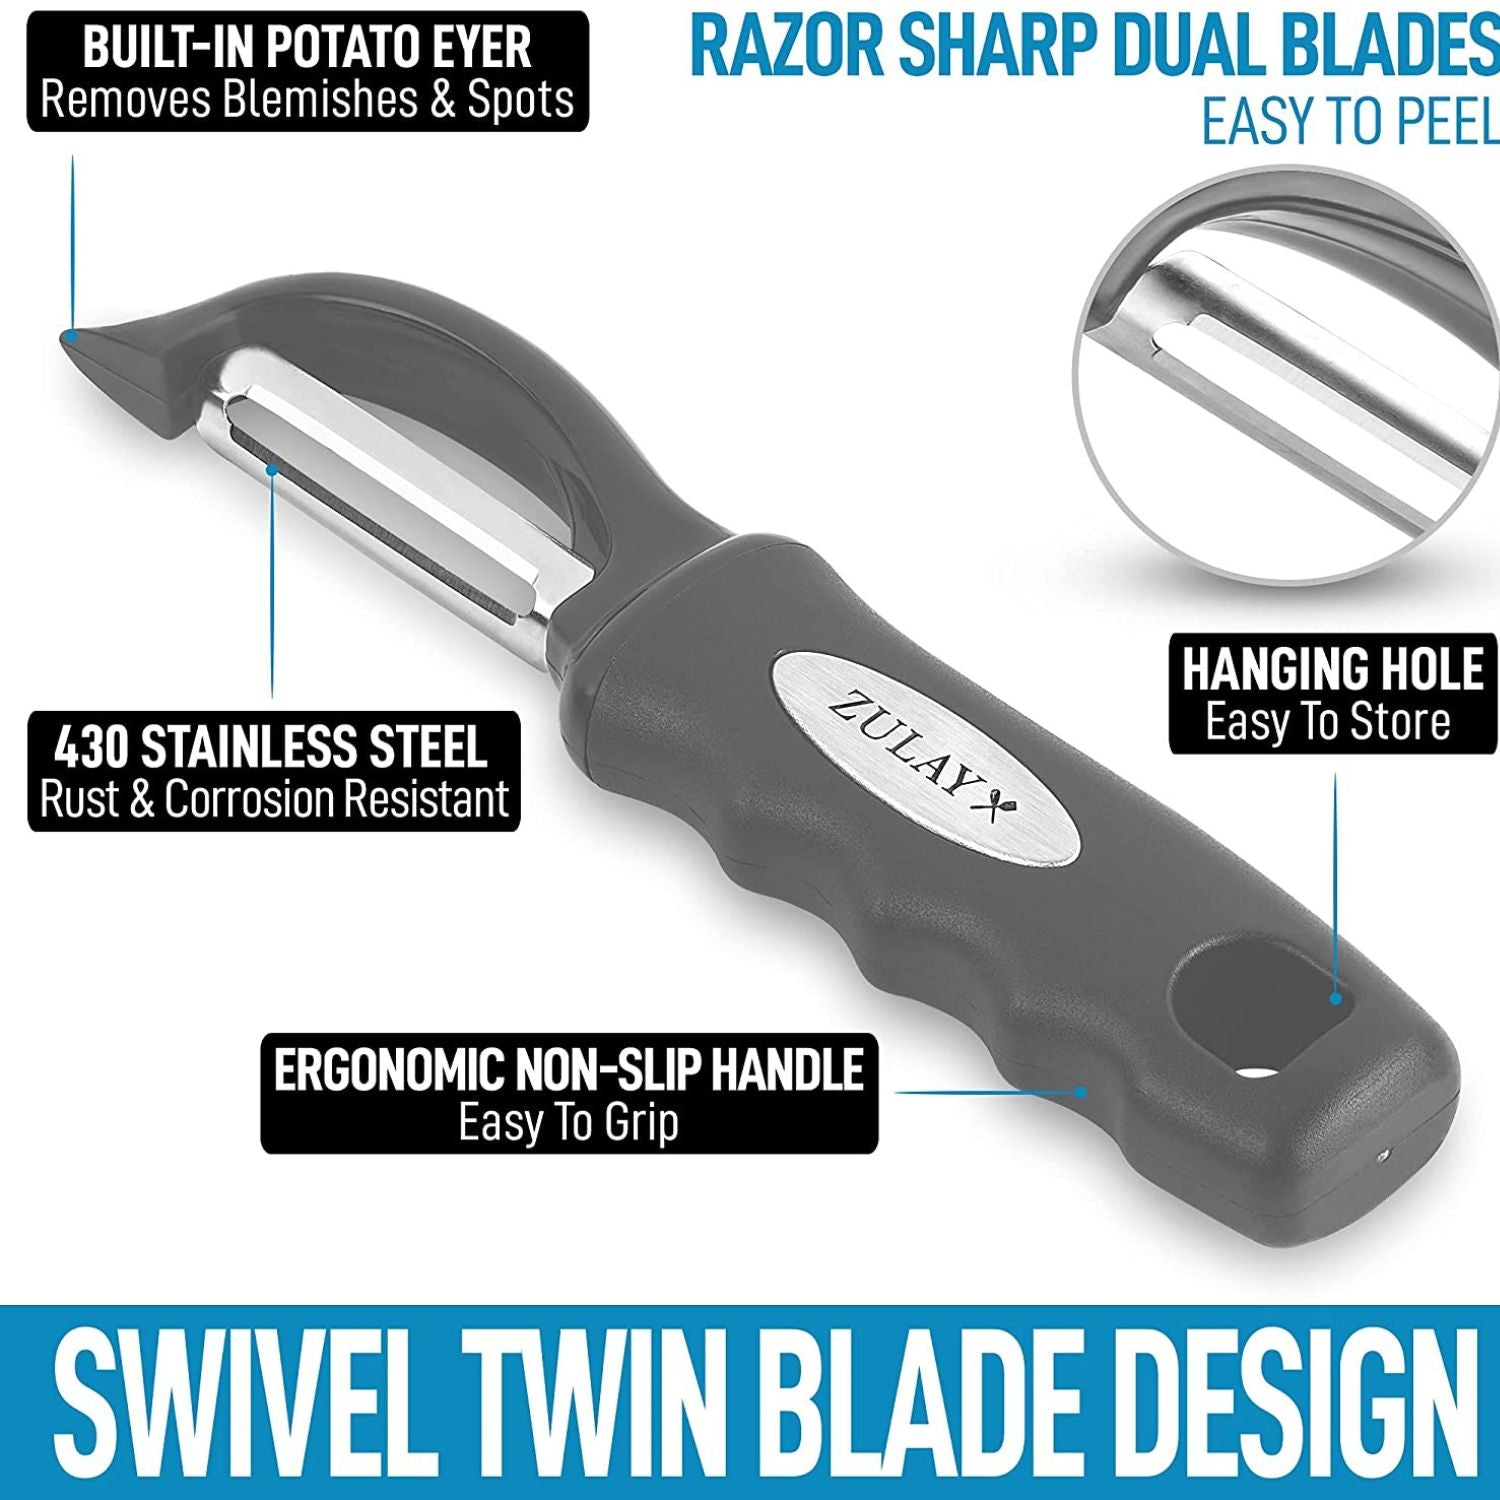 Farberware Professional Euro Peeler with Stainless Steel Blade in Black